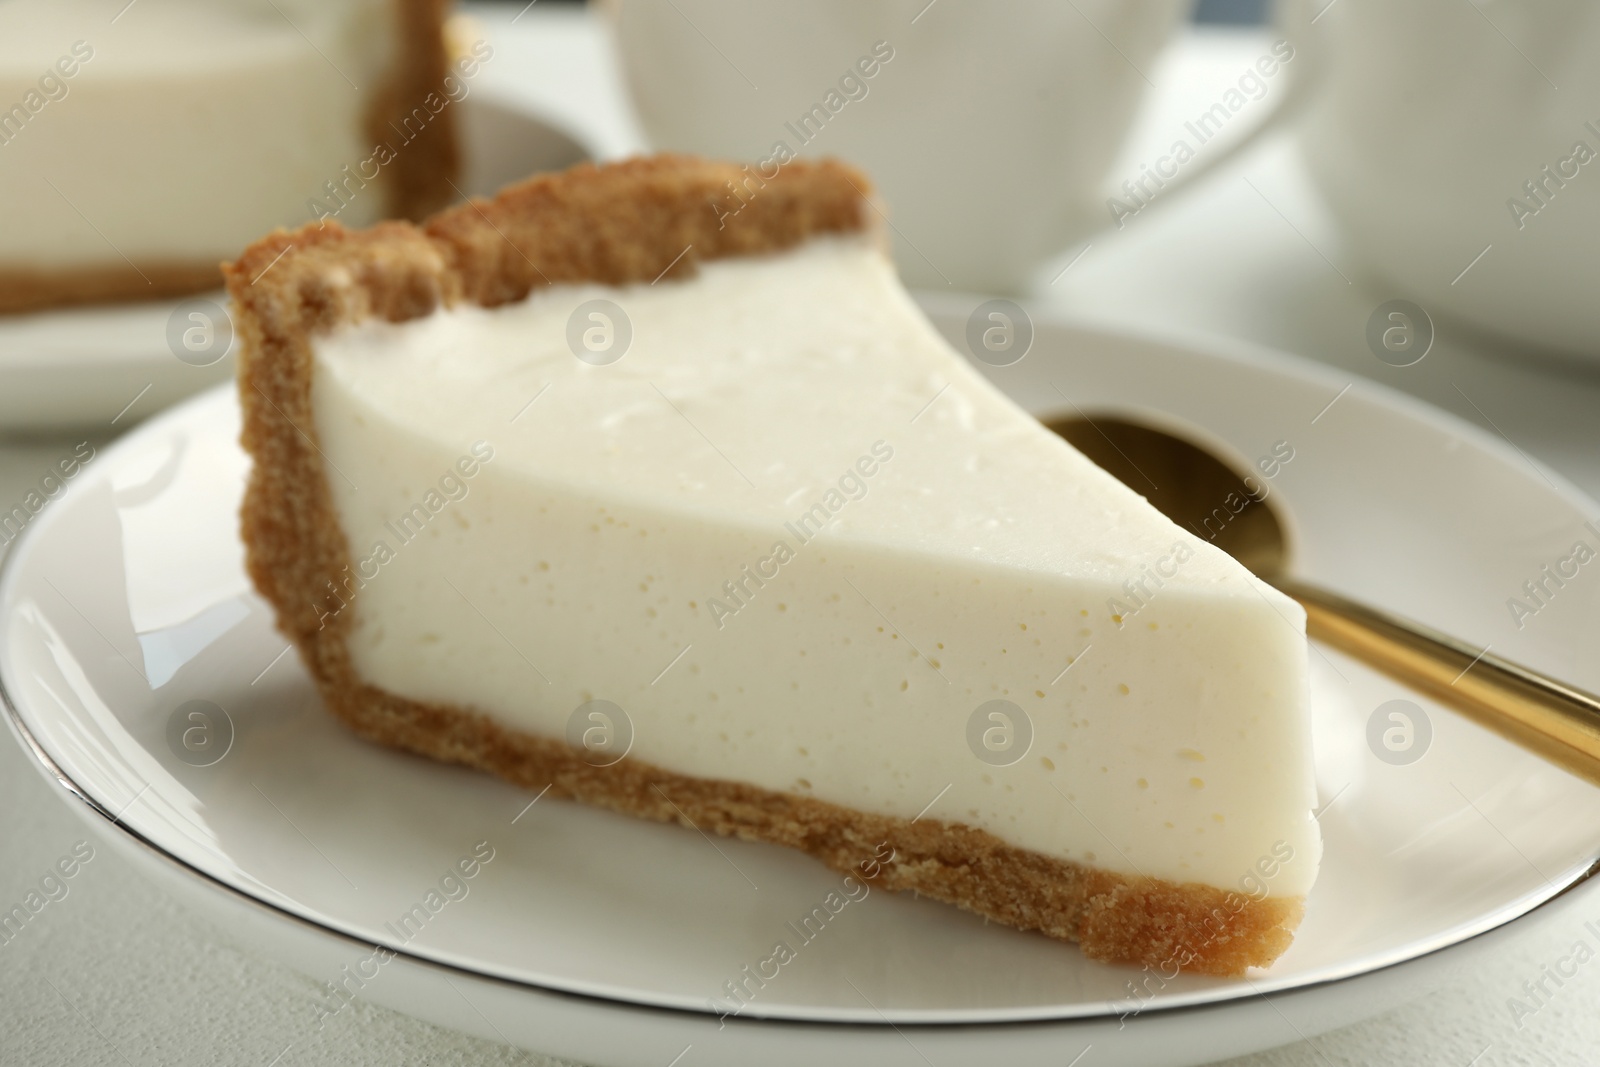 Photo of Piece of tasty vegan tofu cheesecake on table, closeup